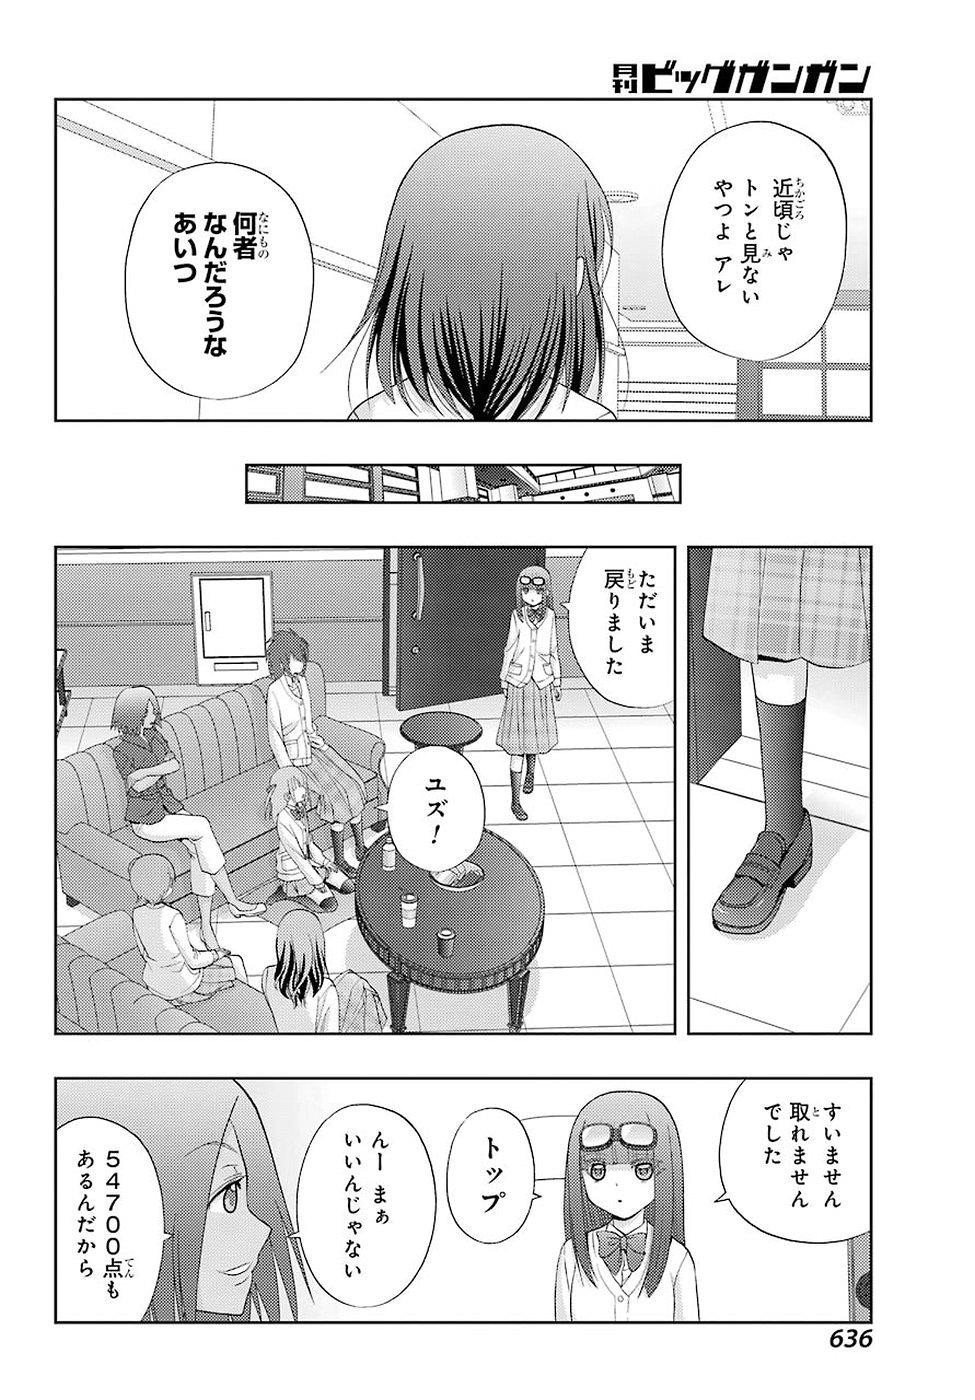 Shinohayu - The Dawn of Age Manga - Chapter 047 - Page 4